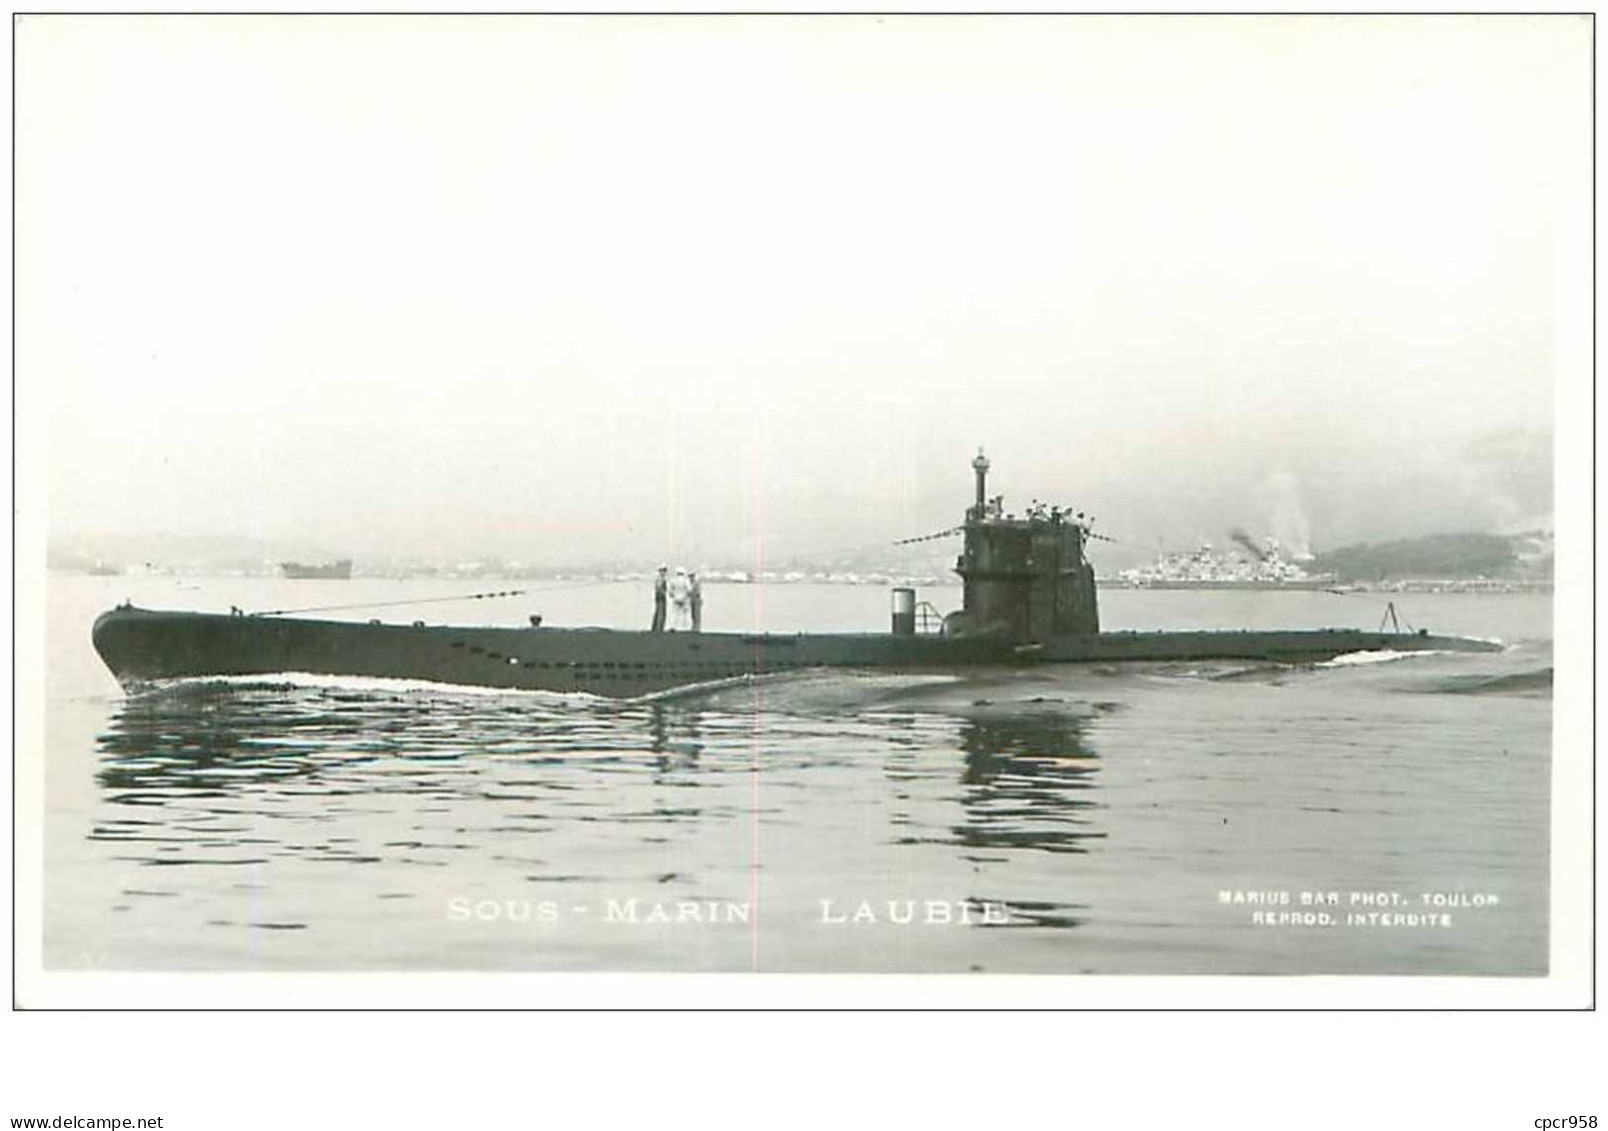 SOUS-MARINS.n°24835.PHOTO DE MARIUS BAR.LAUBIE - Submarines